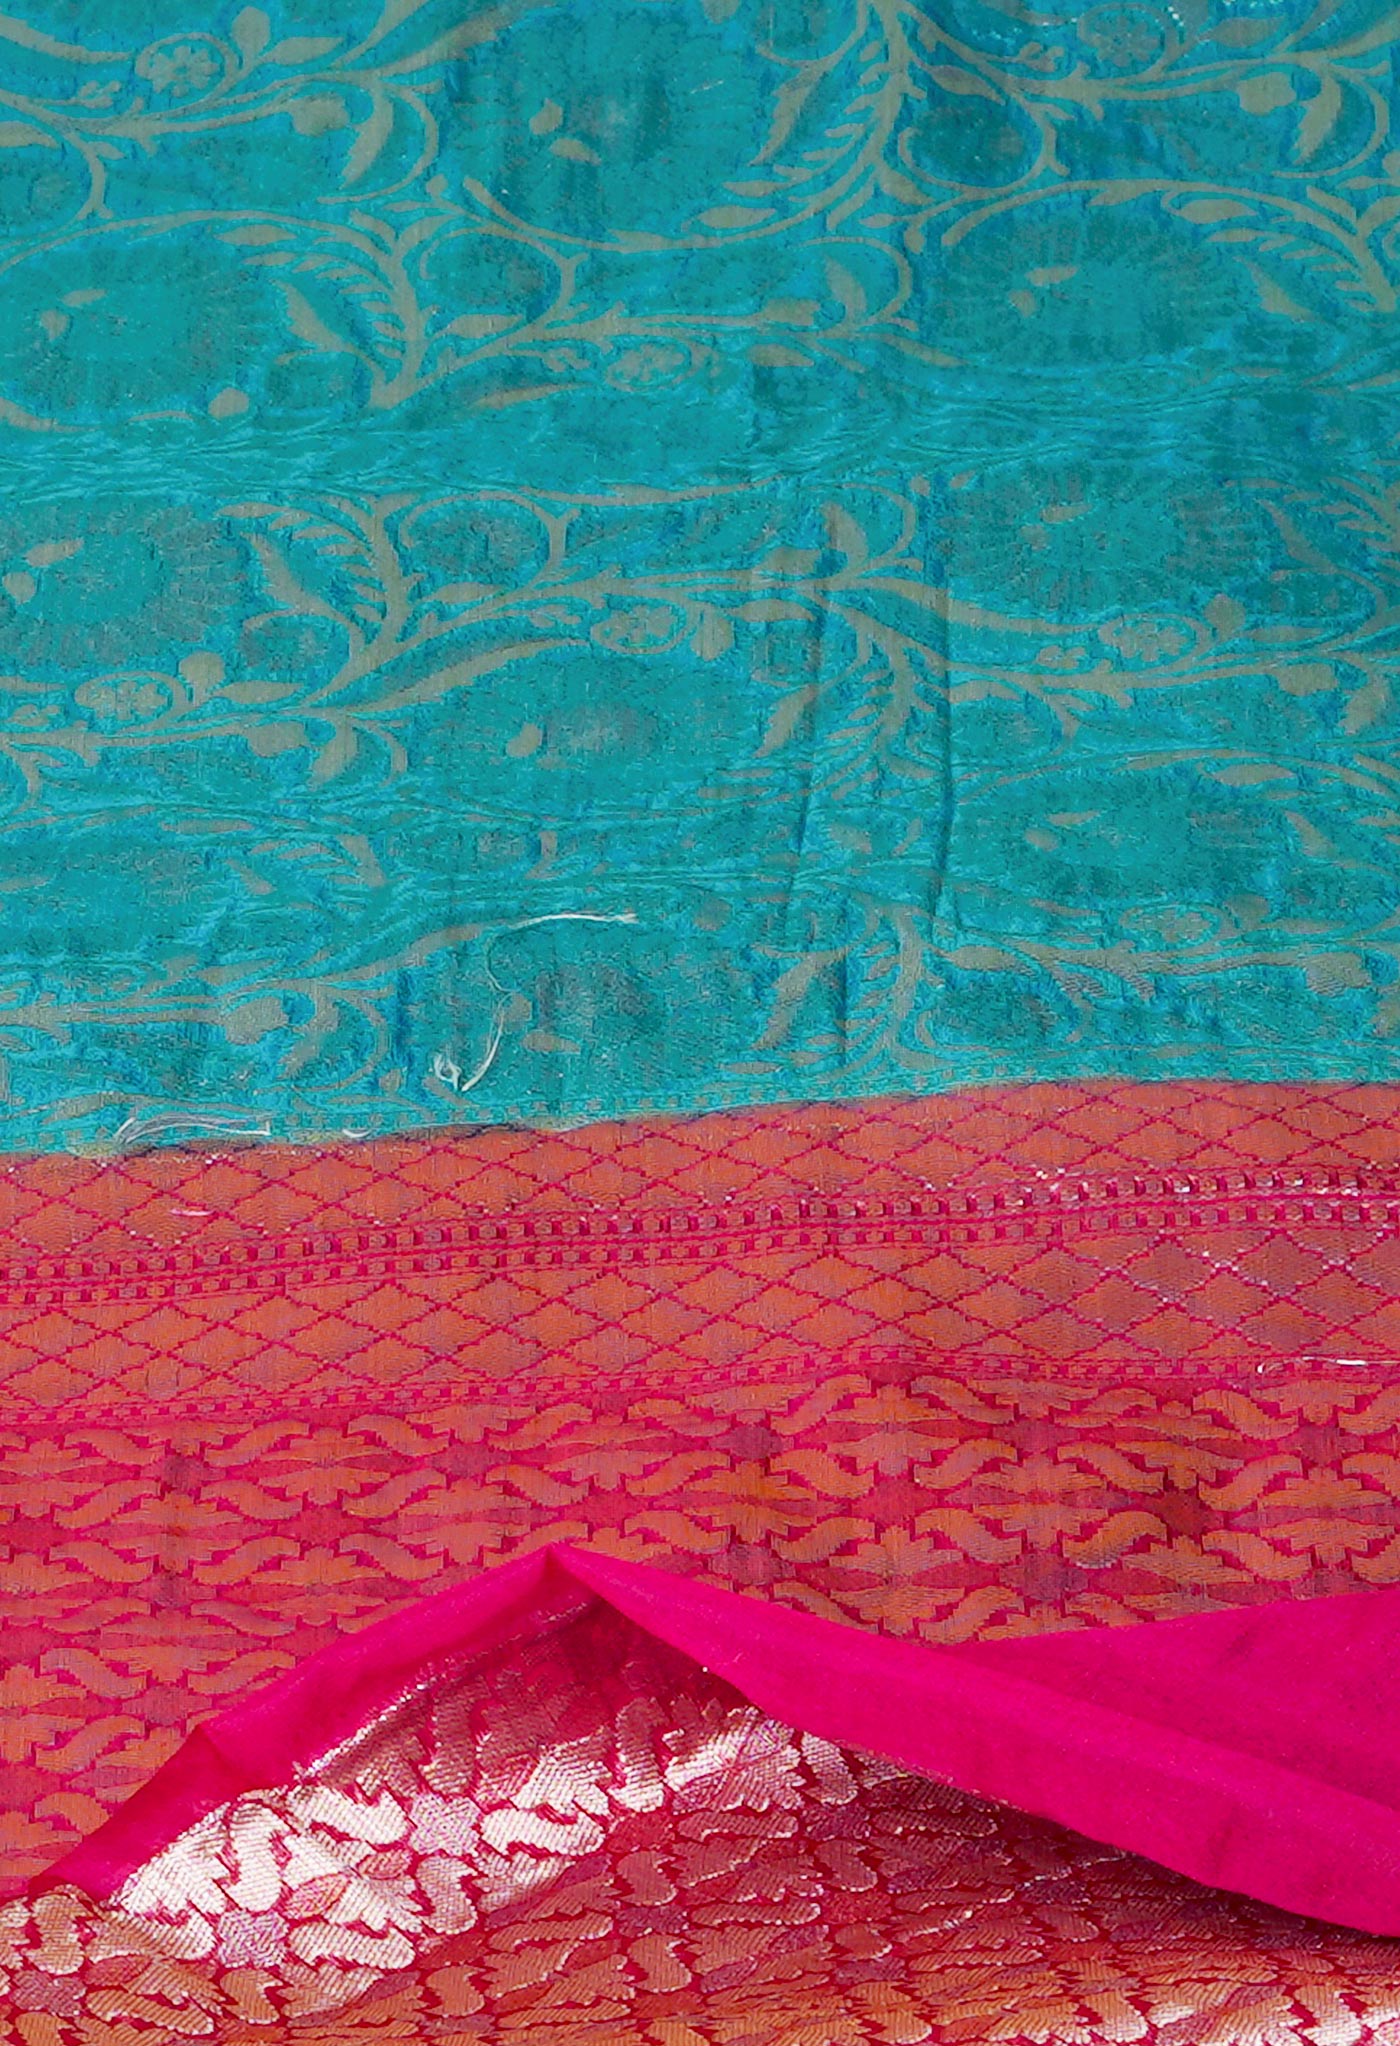 Sky Blue  Fancy Banarasi silk Saree-UNM70531